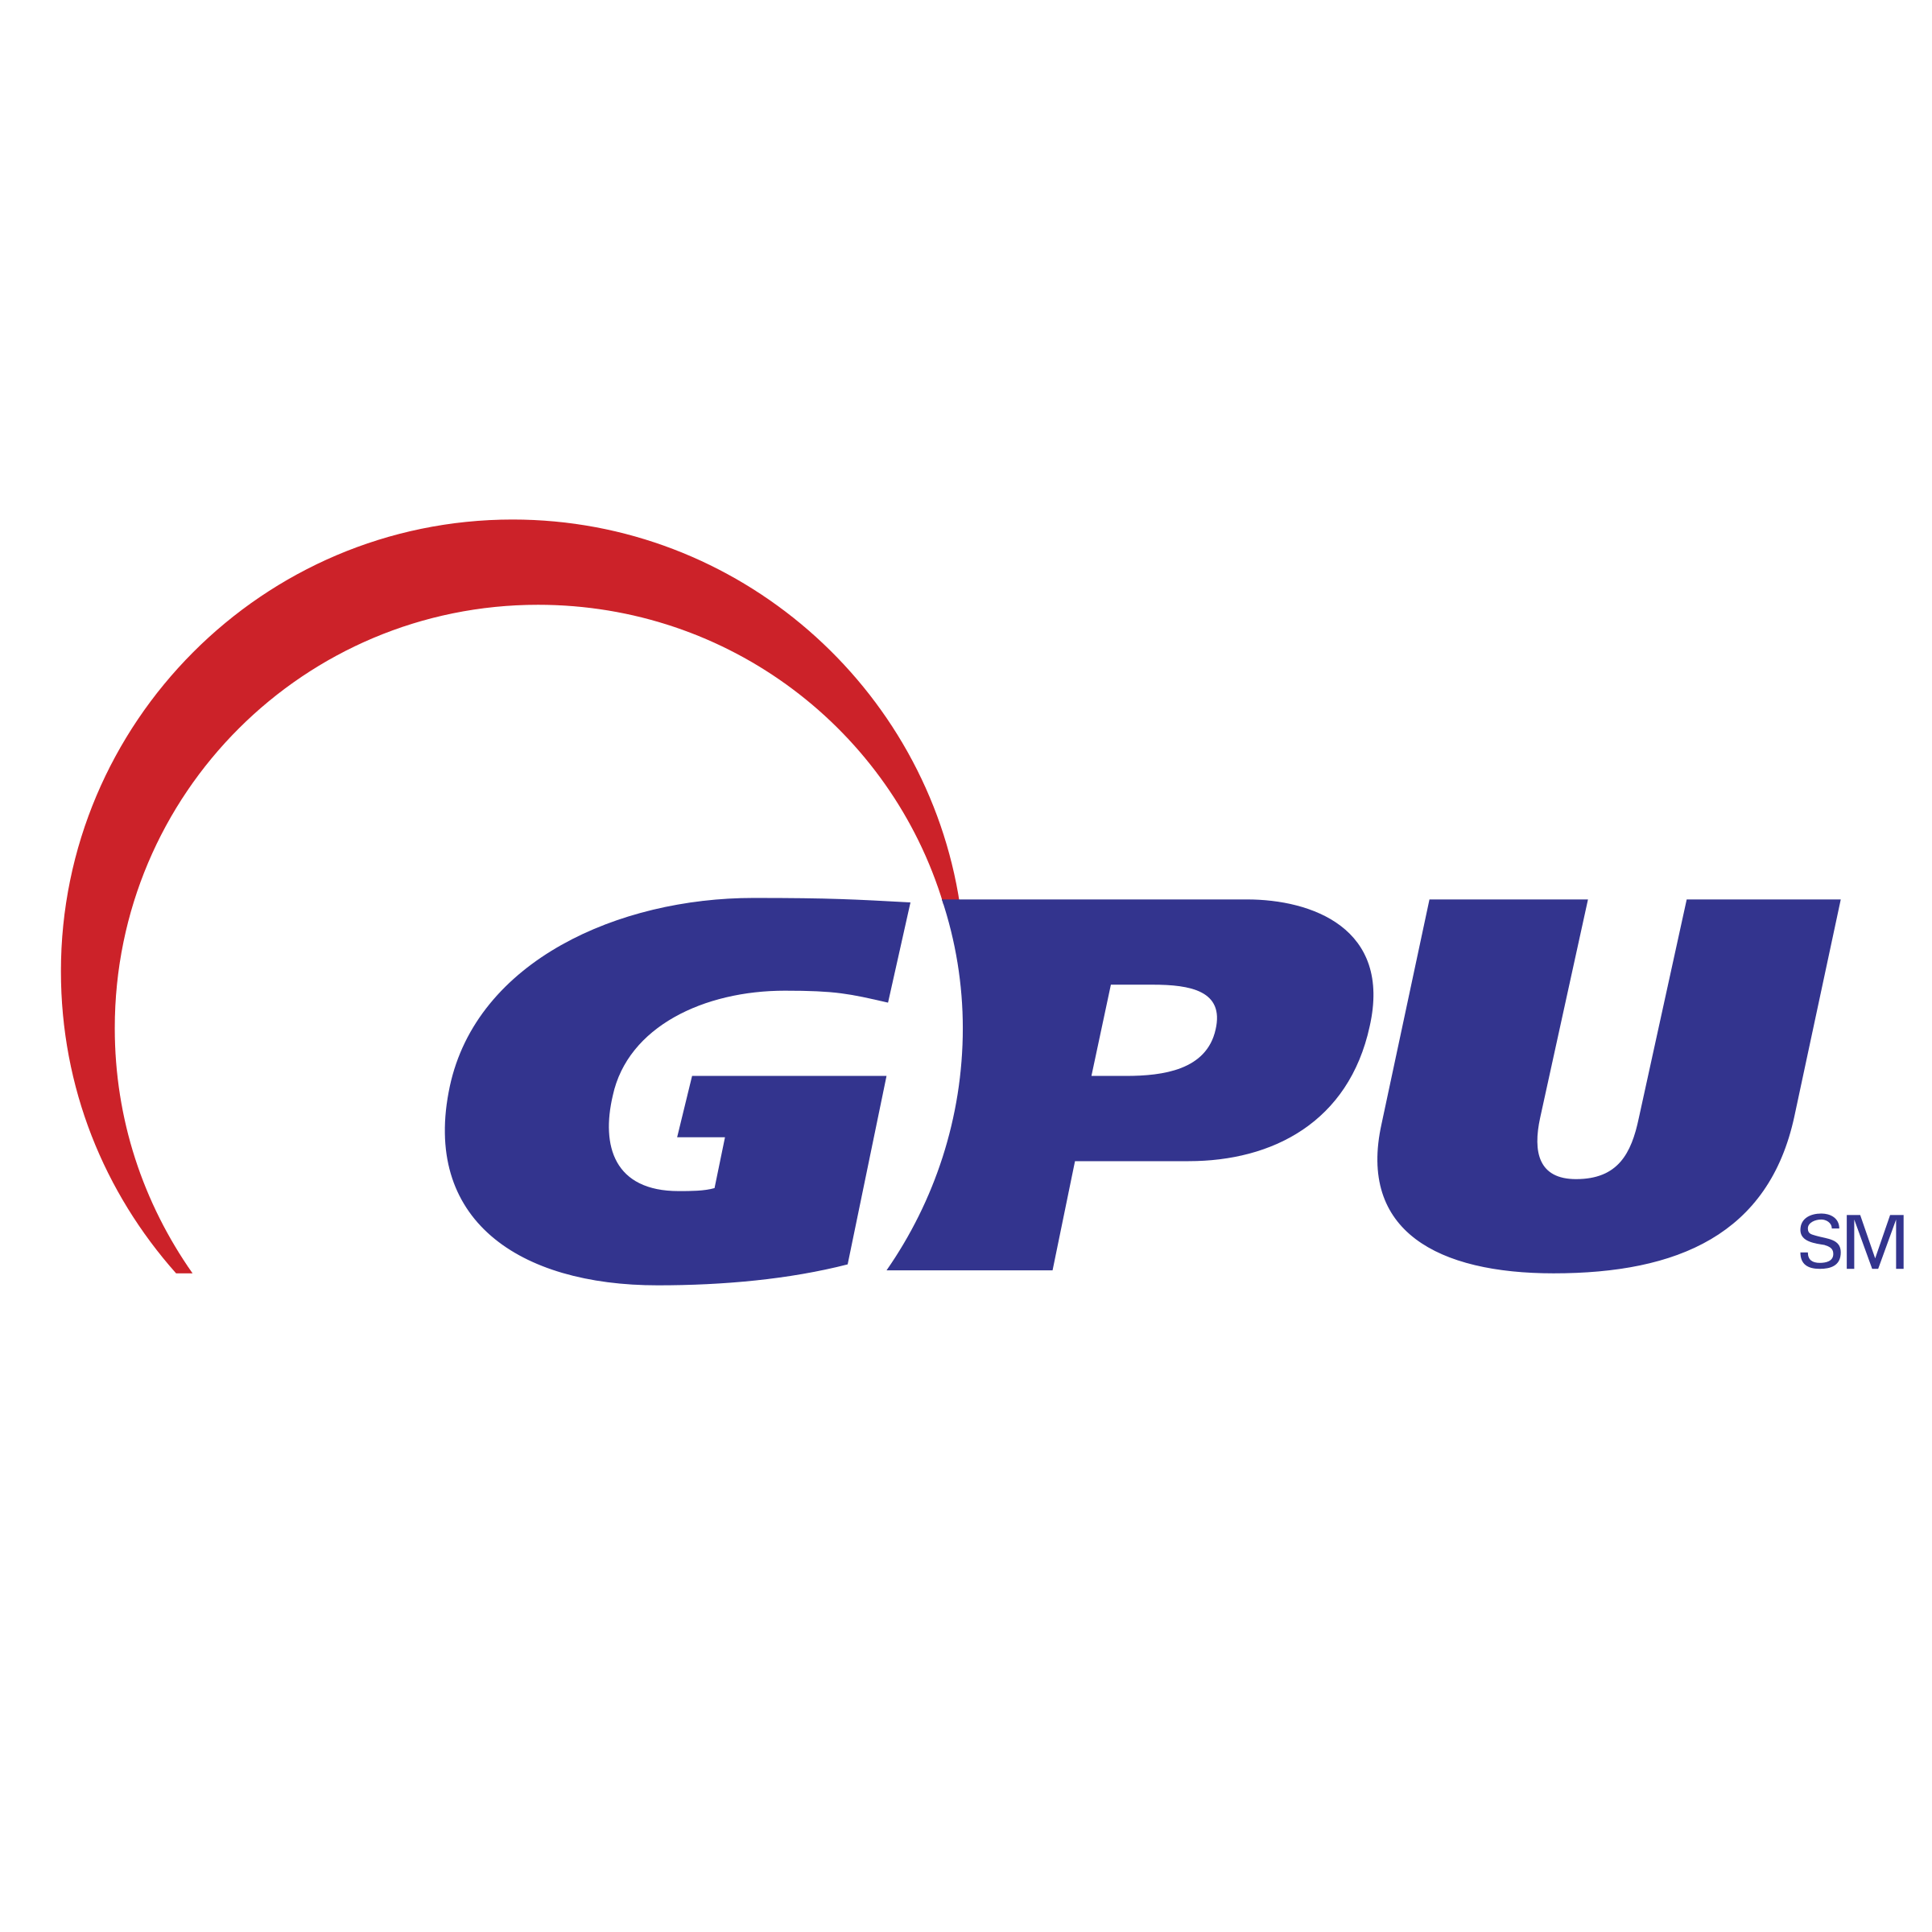 GPU Logo - GPU Logo PNG Transparent & SVG Vector - Freebie Supply